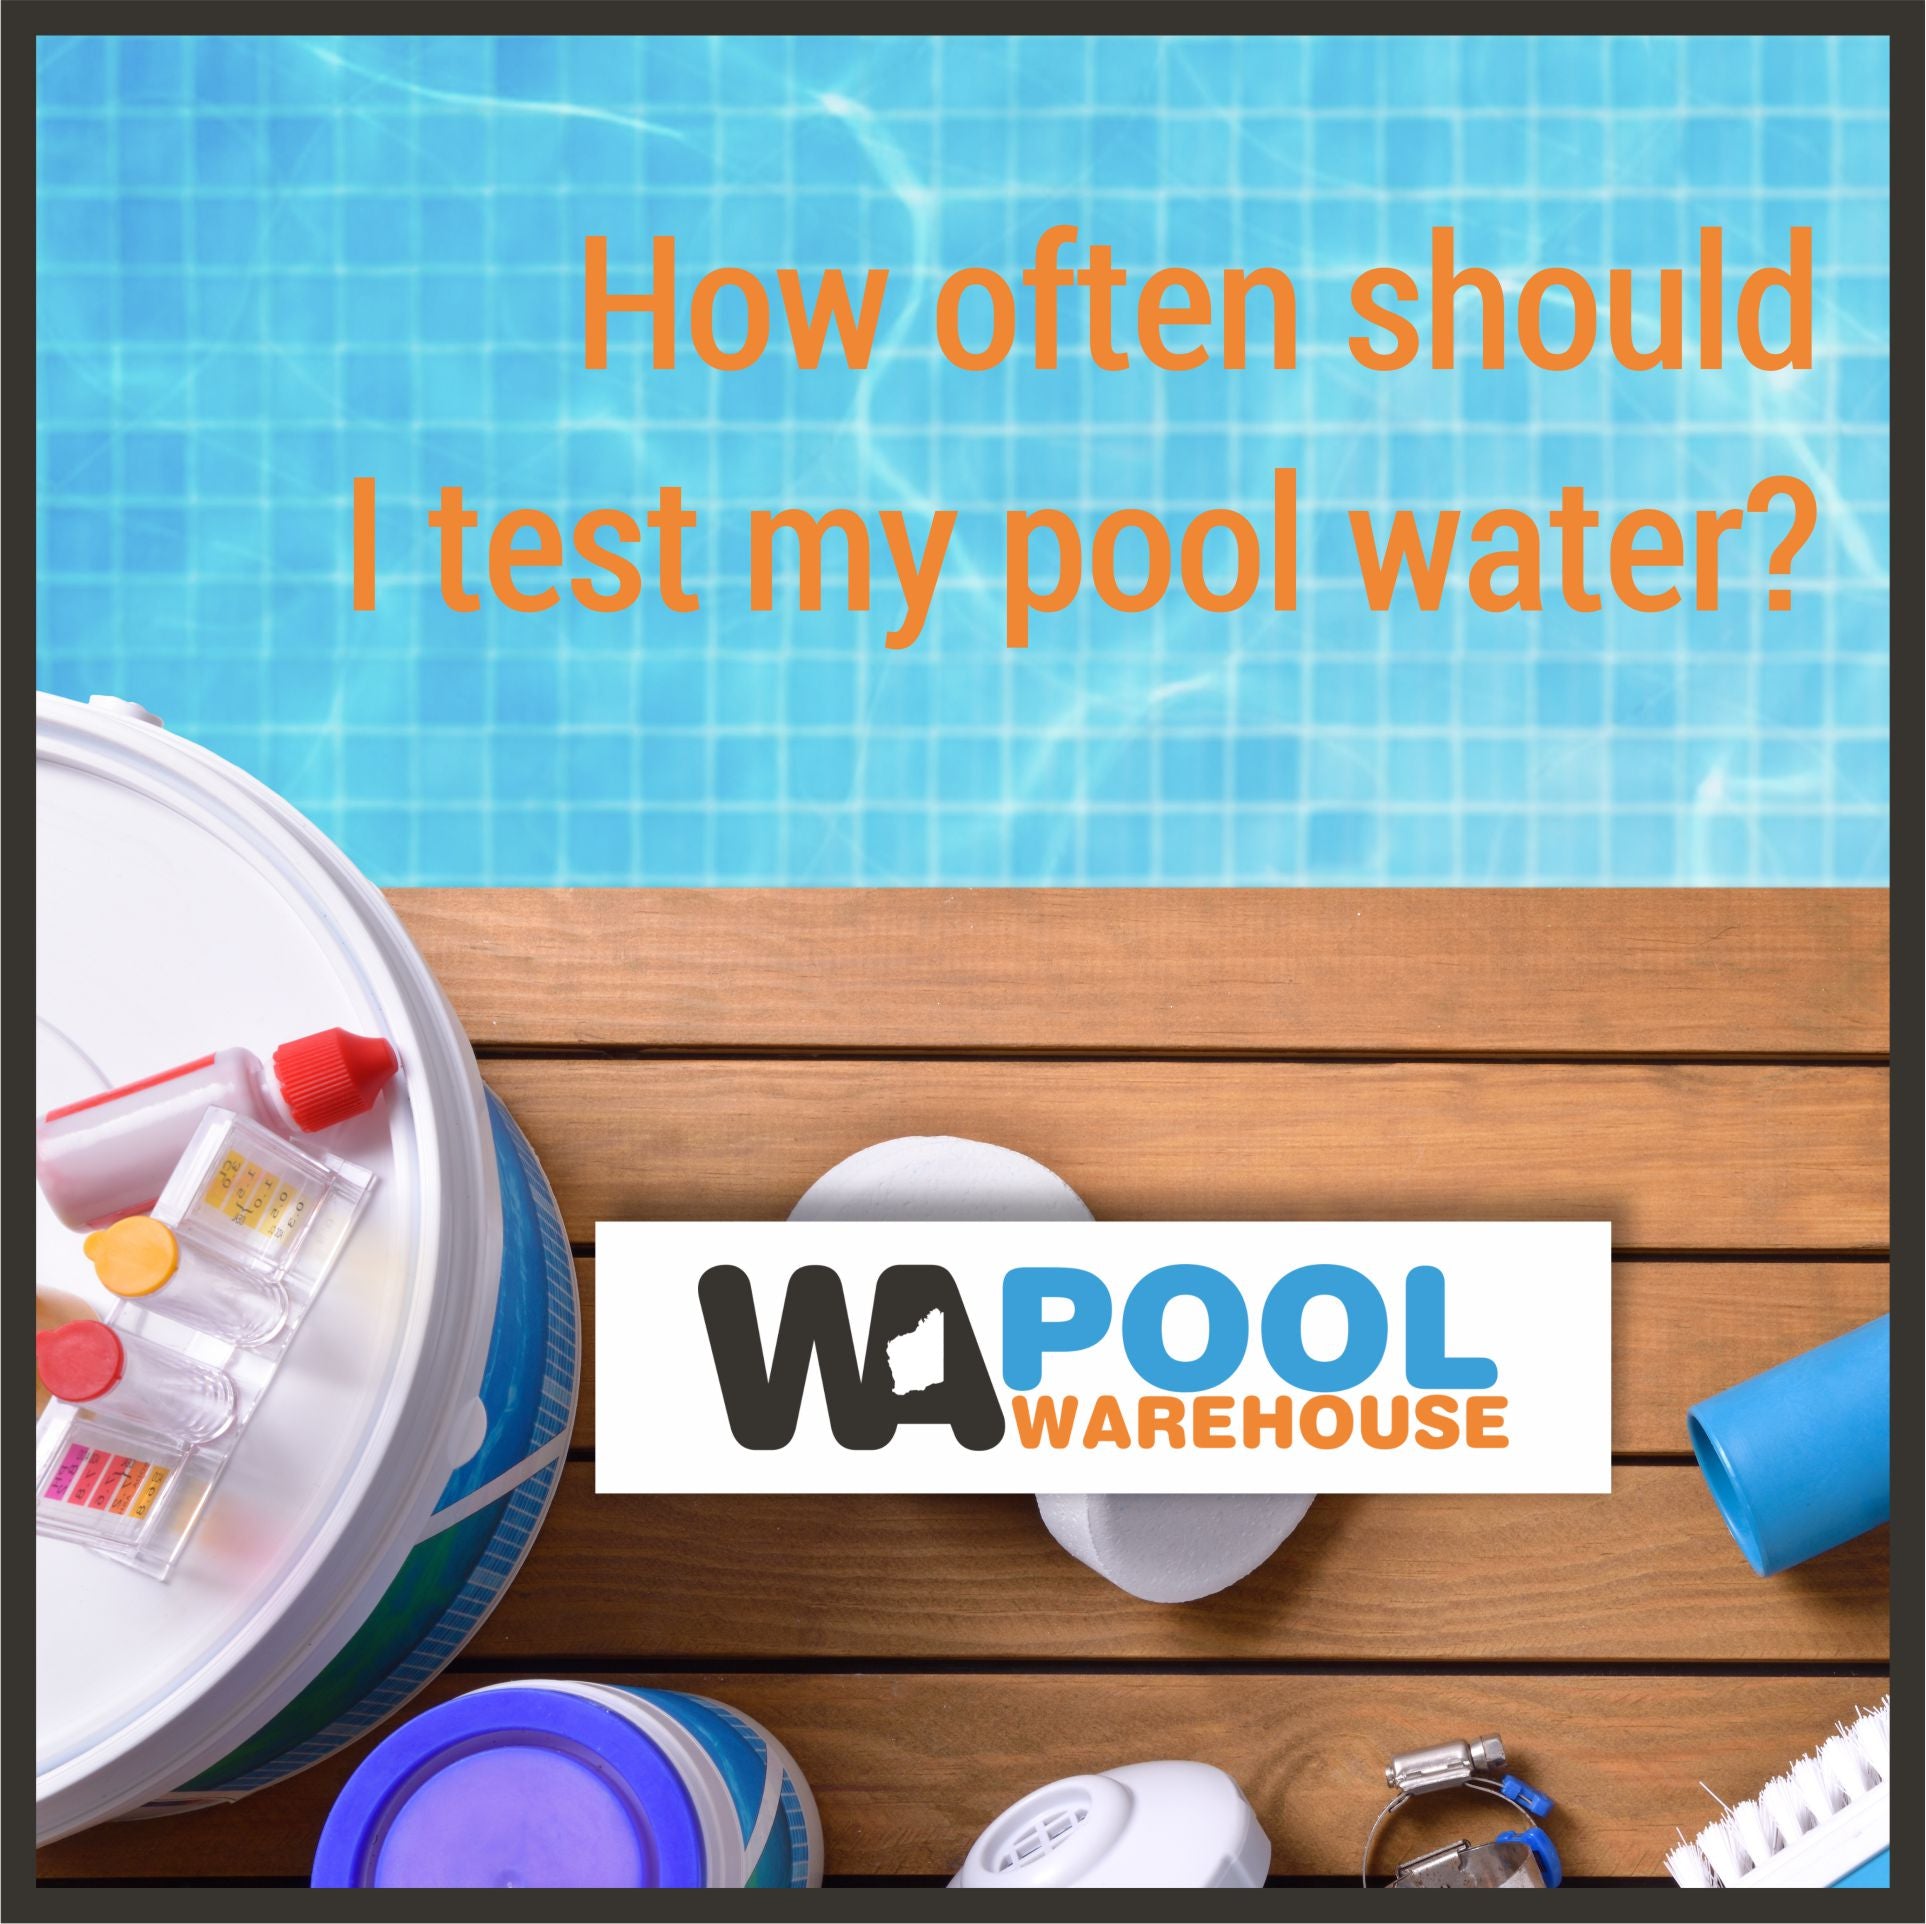 How often should I test my pool?